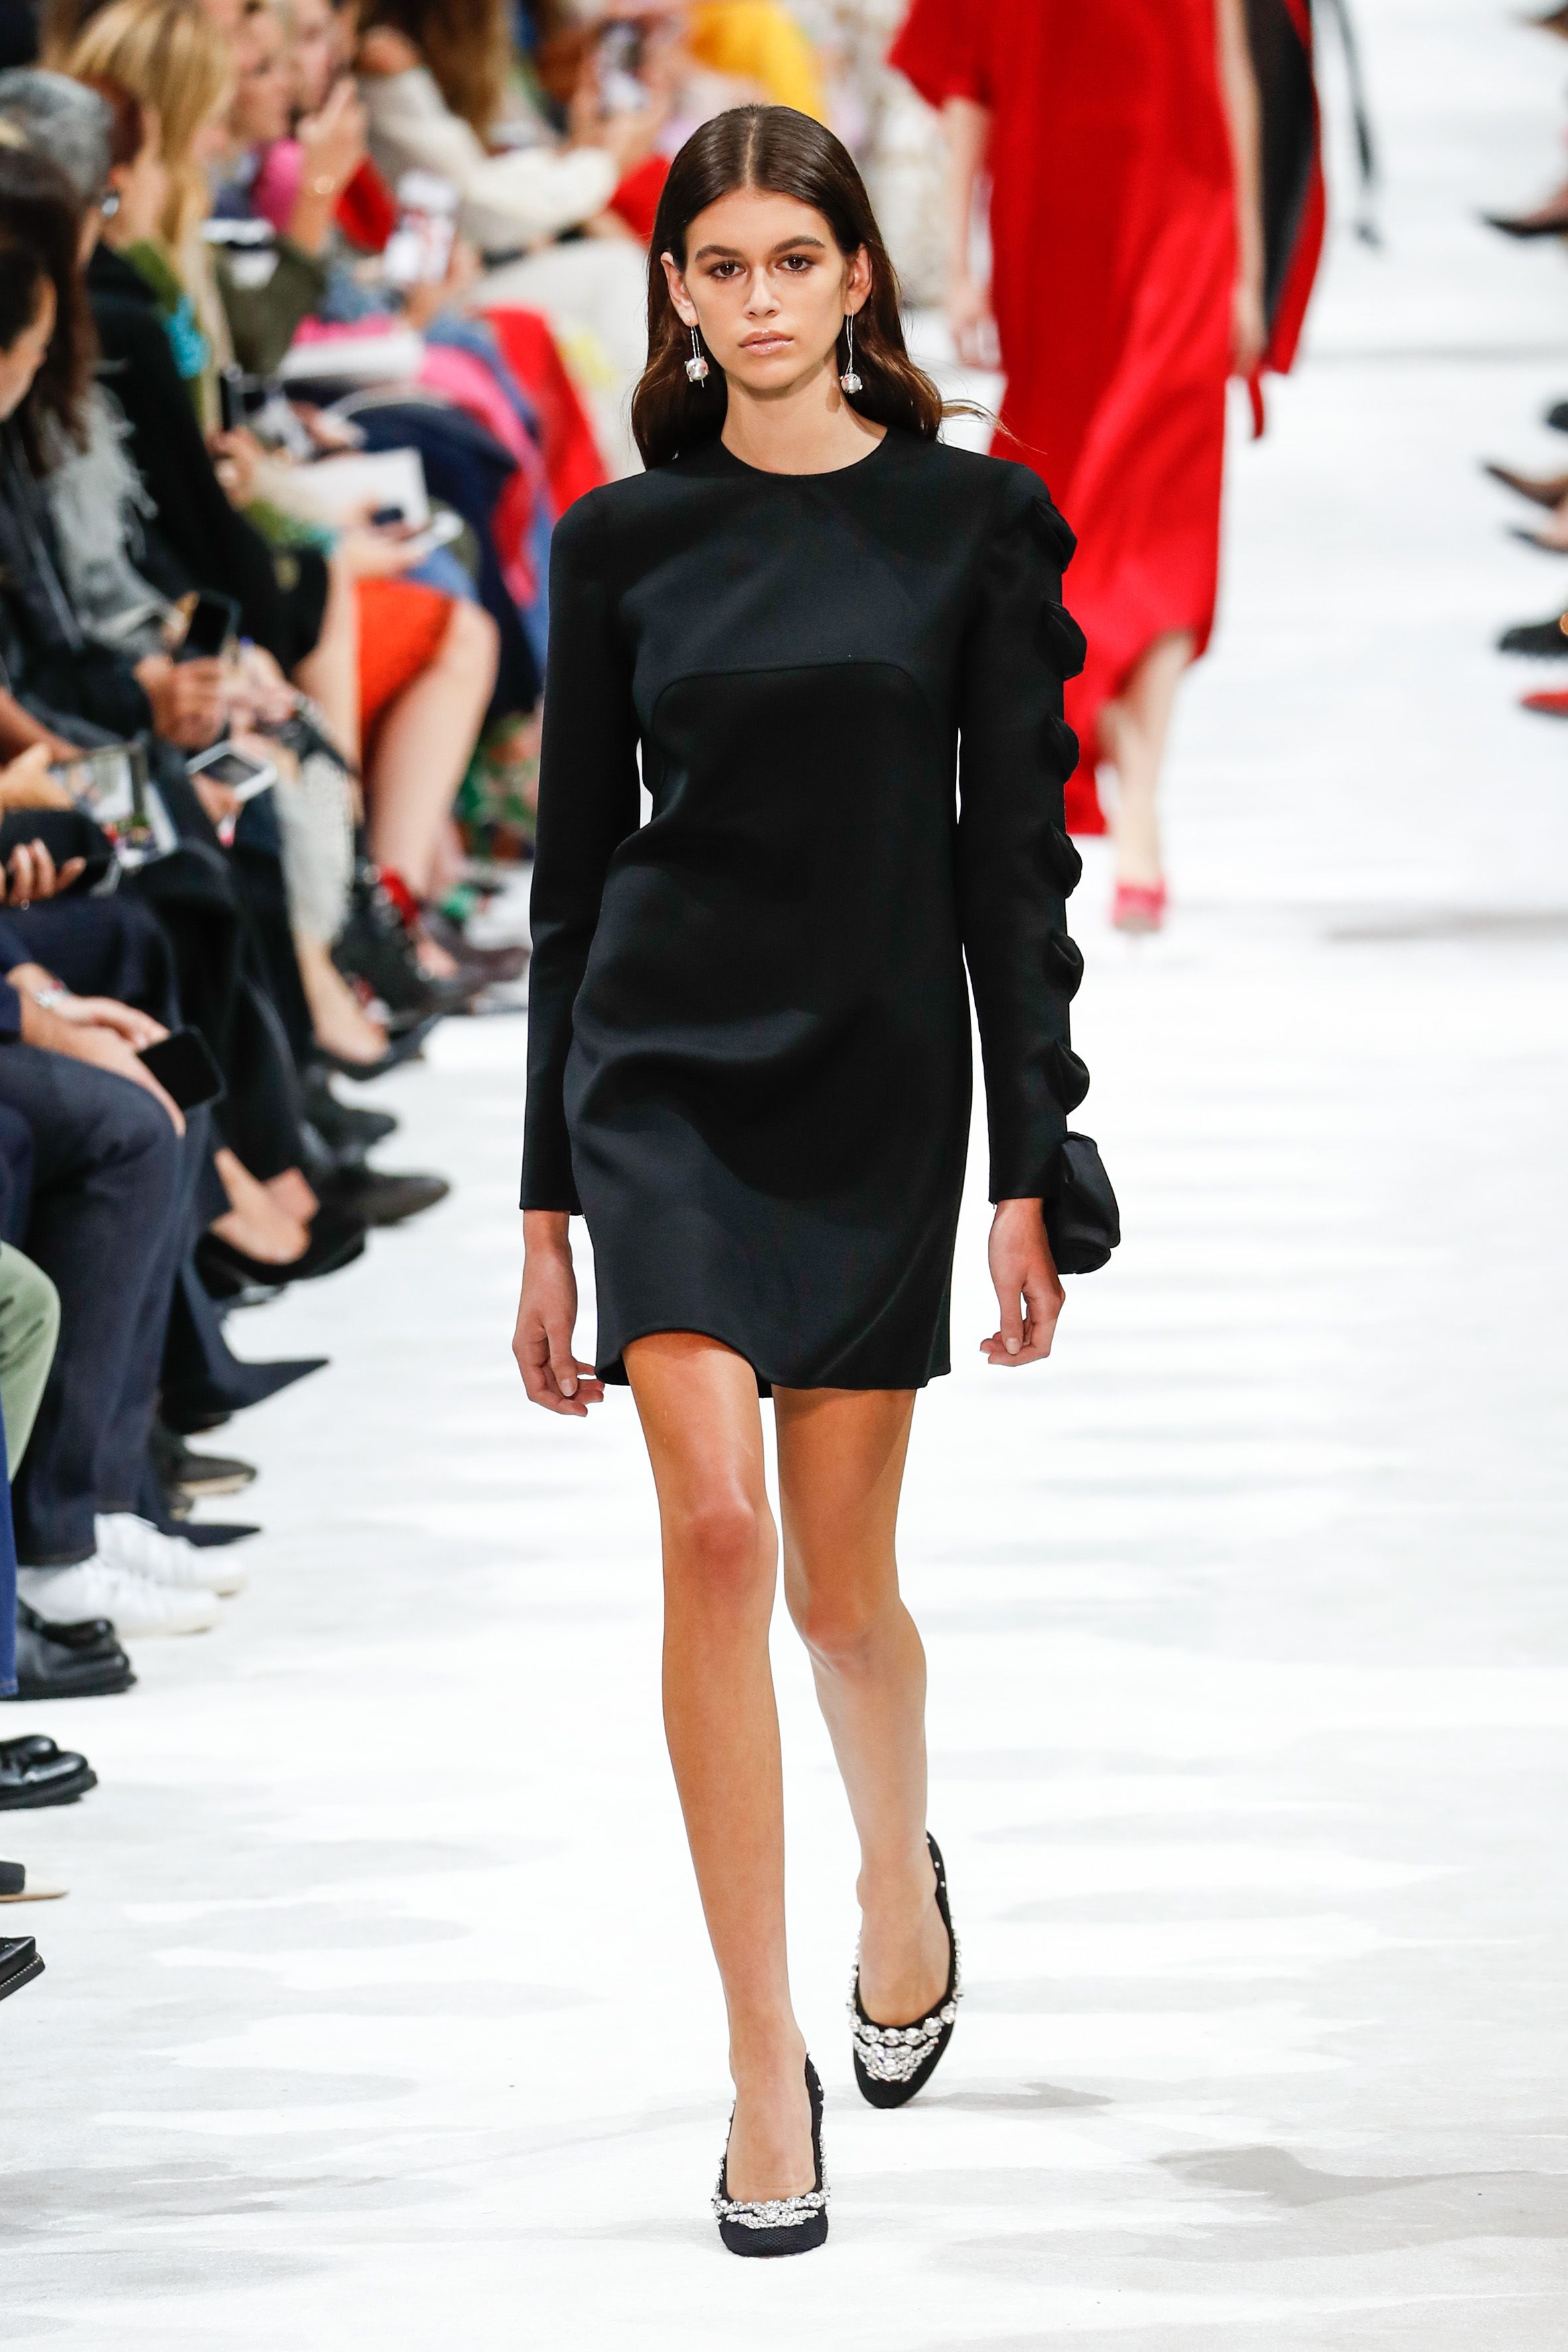 Cindy Crawford & Kaia Gerber Walk In Paris Fashion Week Runway Show –  Hollywood Life